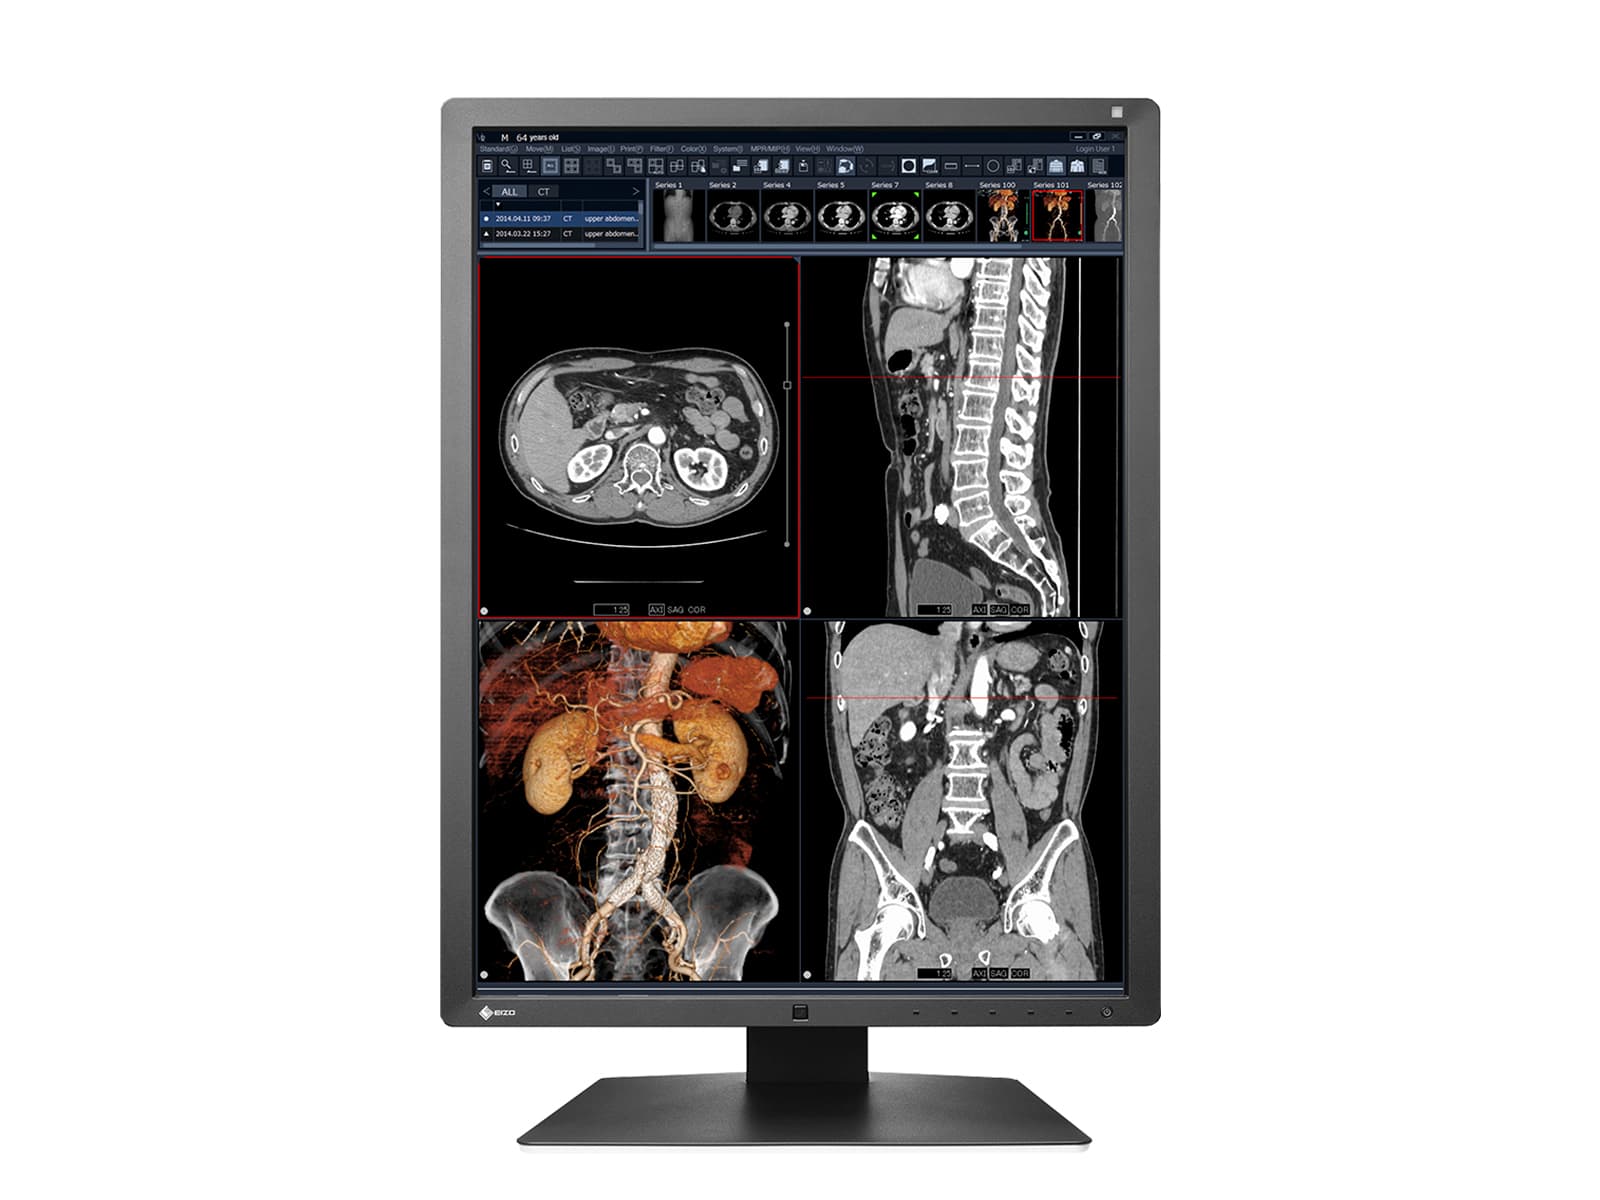 Eizo RadiForce RX250 2MP 21" Color LED Medical Diagnostic Radiology Display Monitor (RX250-BK) 